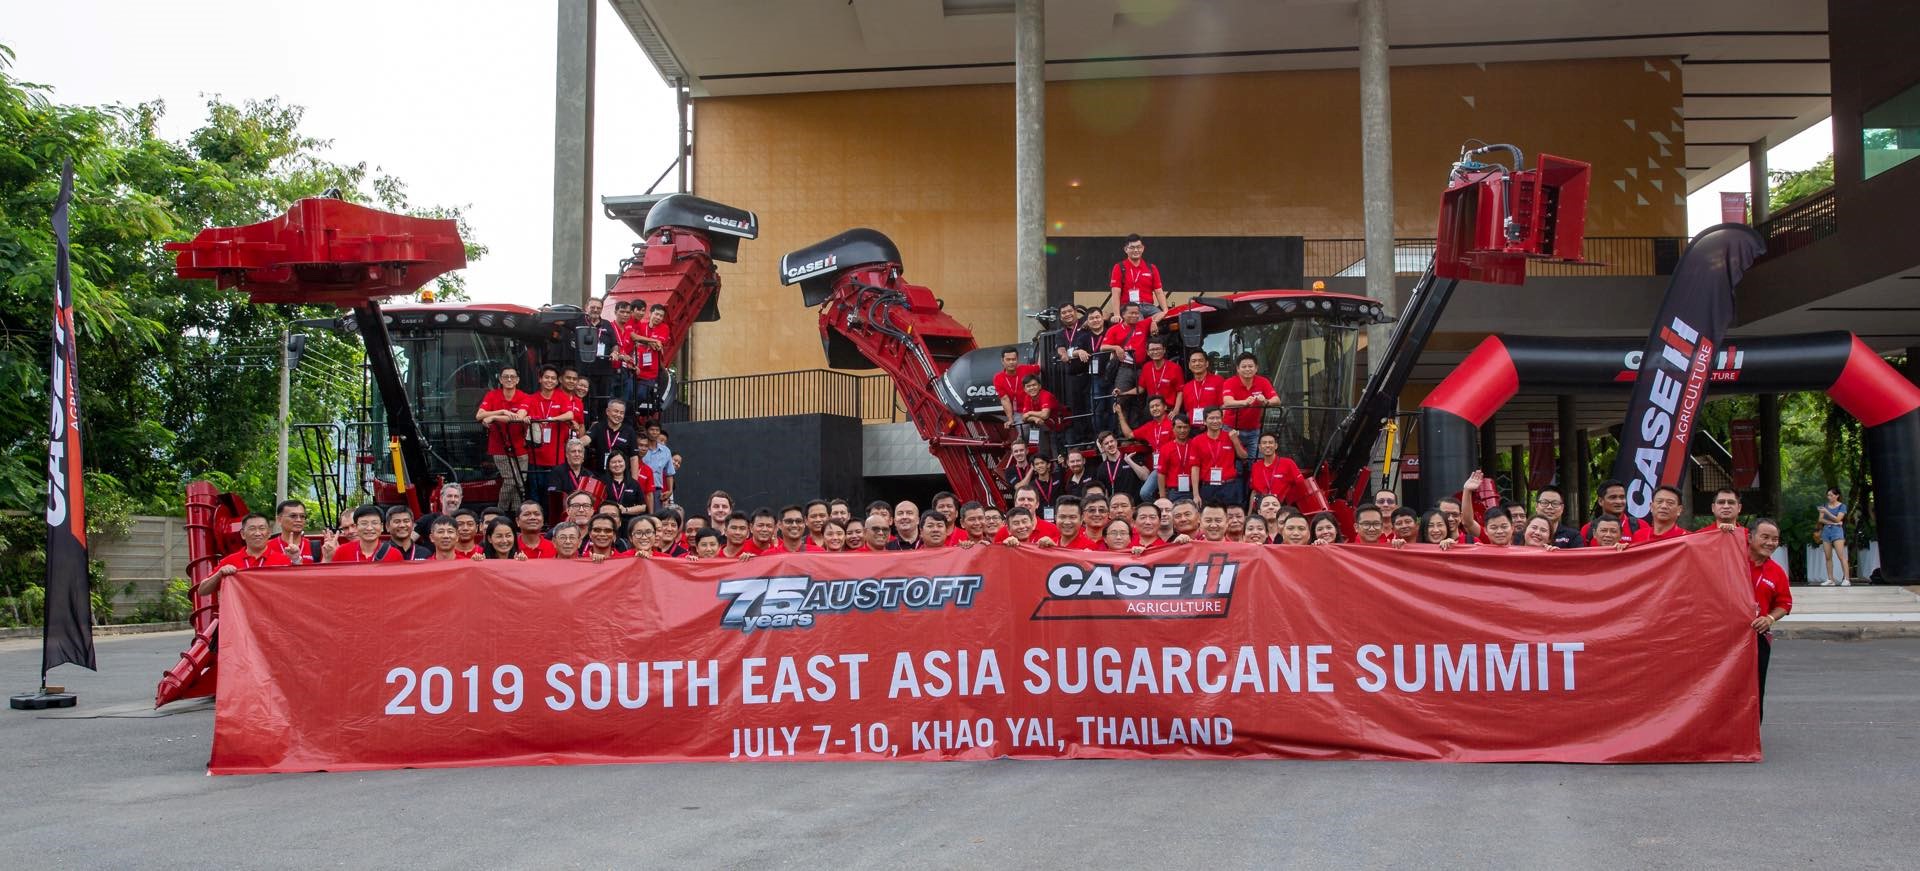 2019 South East Asia Sugarcane Summit